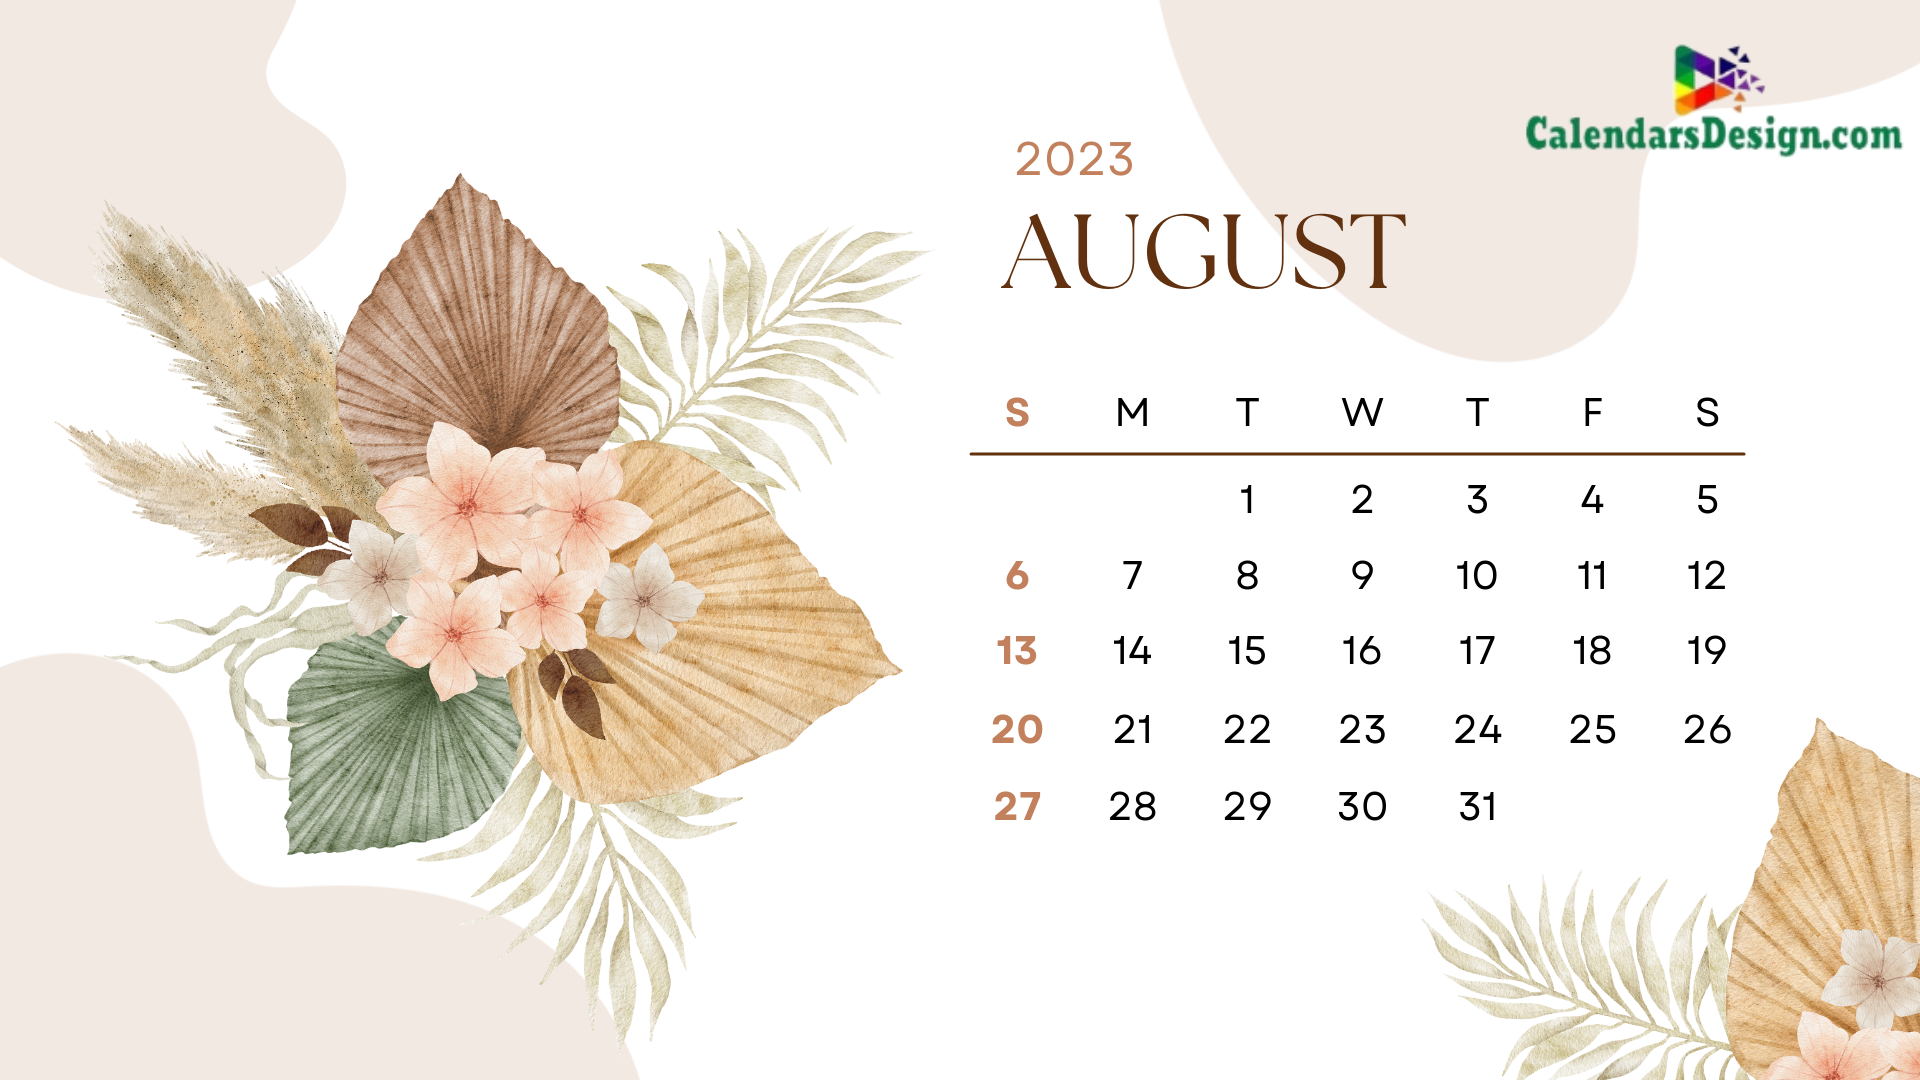 Latest August 2023 Wall Calendar